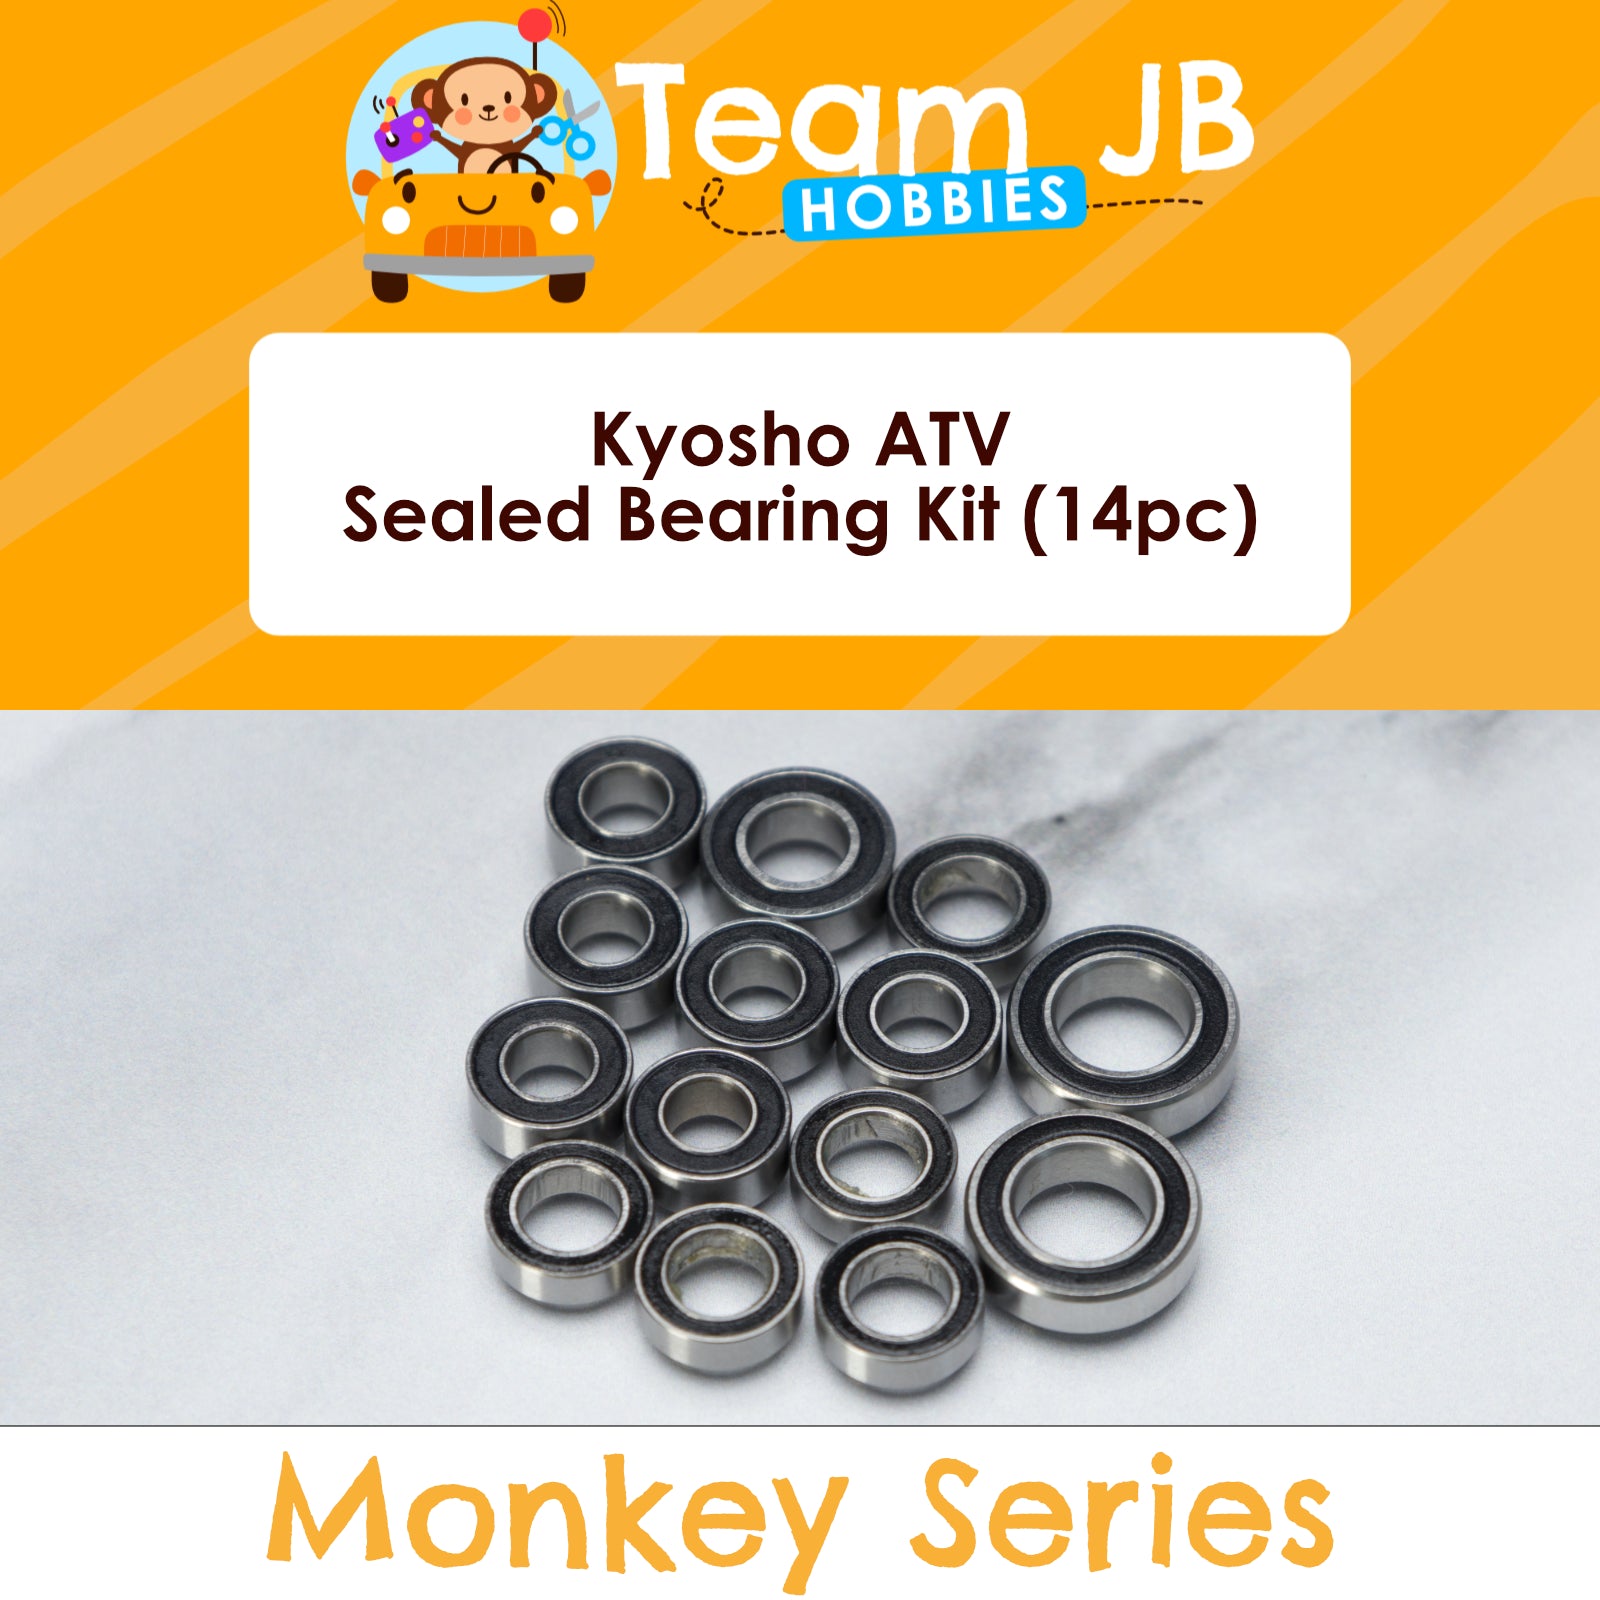 Kyosho ATV - Sealed Bearing Kit